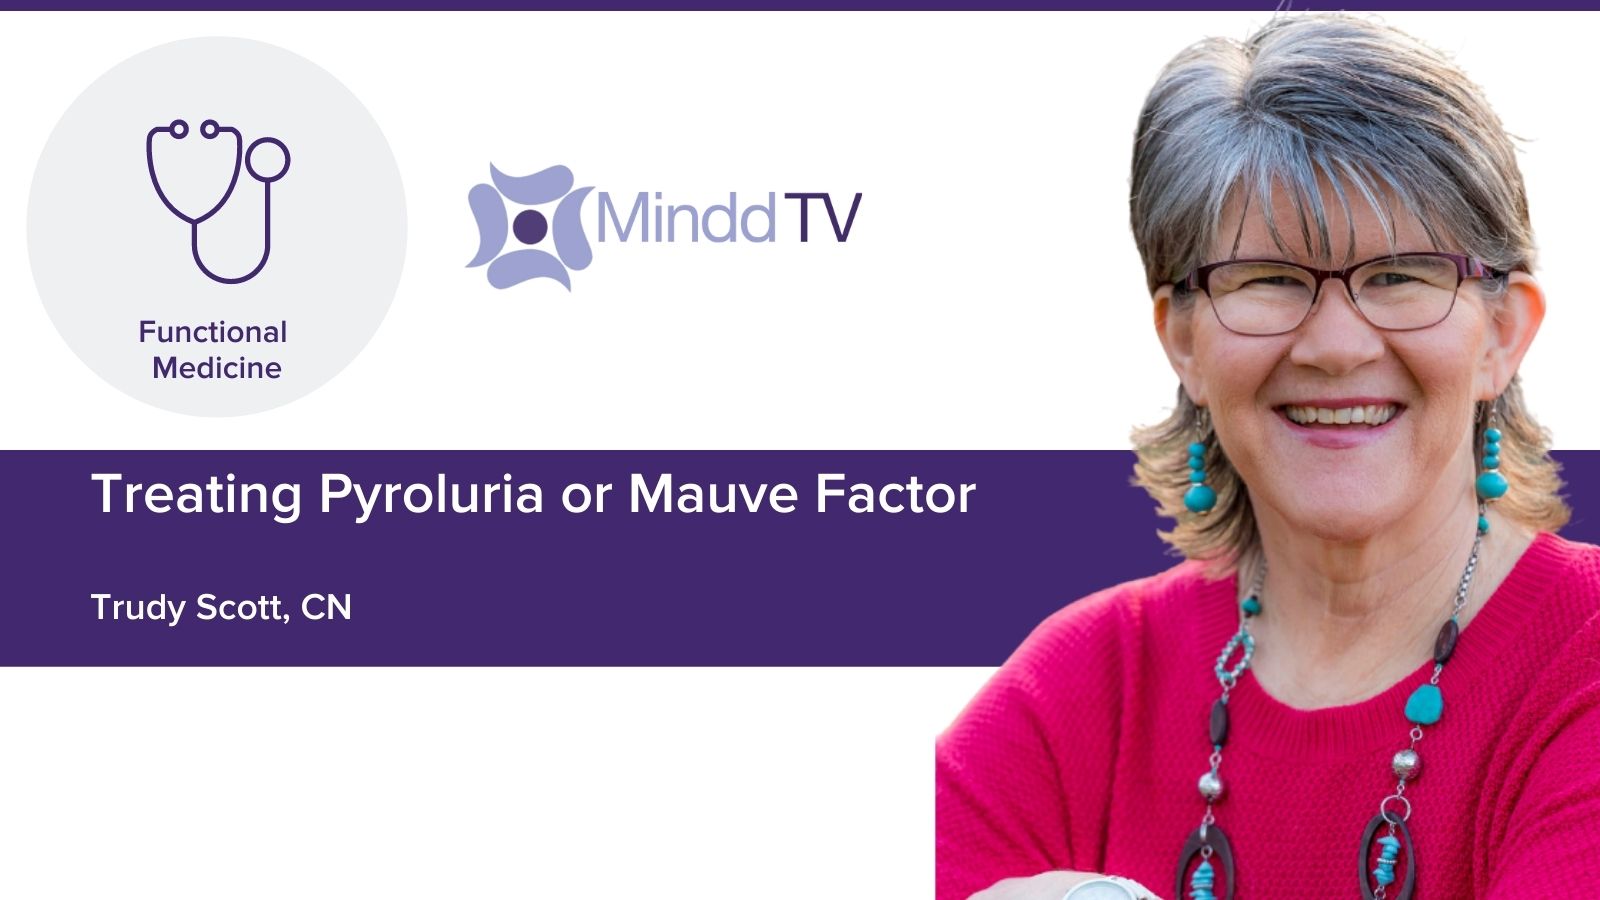 Treating Pyroluria or Mauve Factor, Trudy Scott, CN